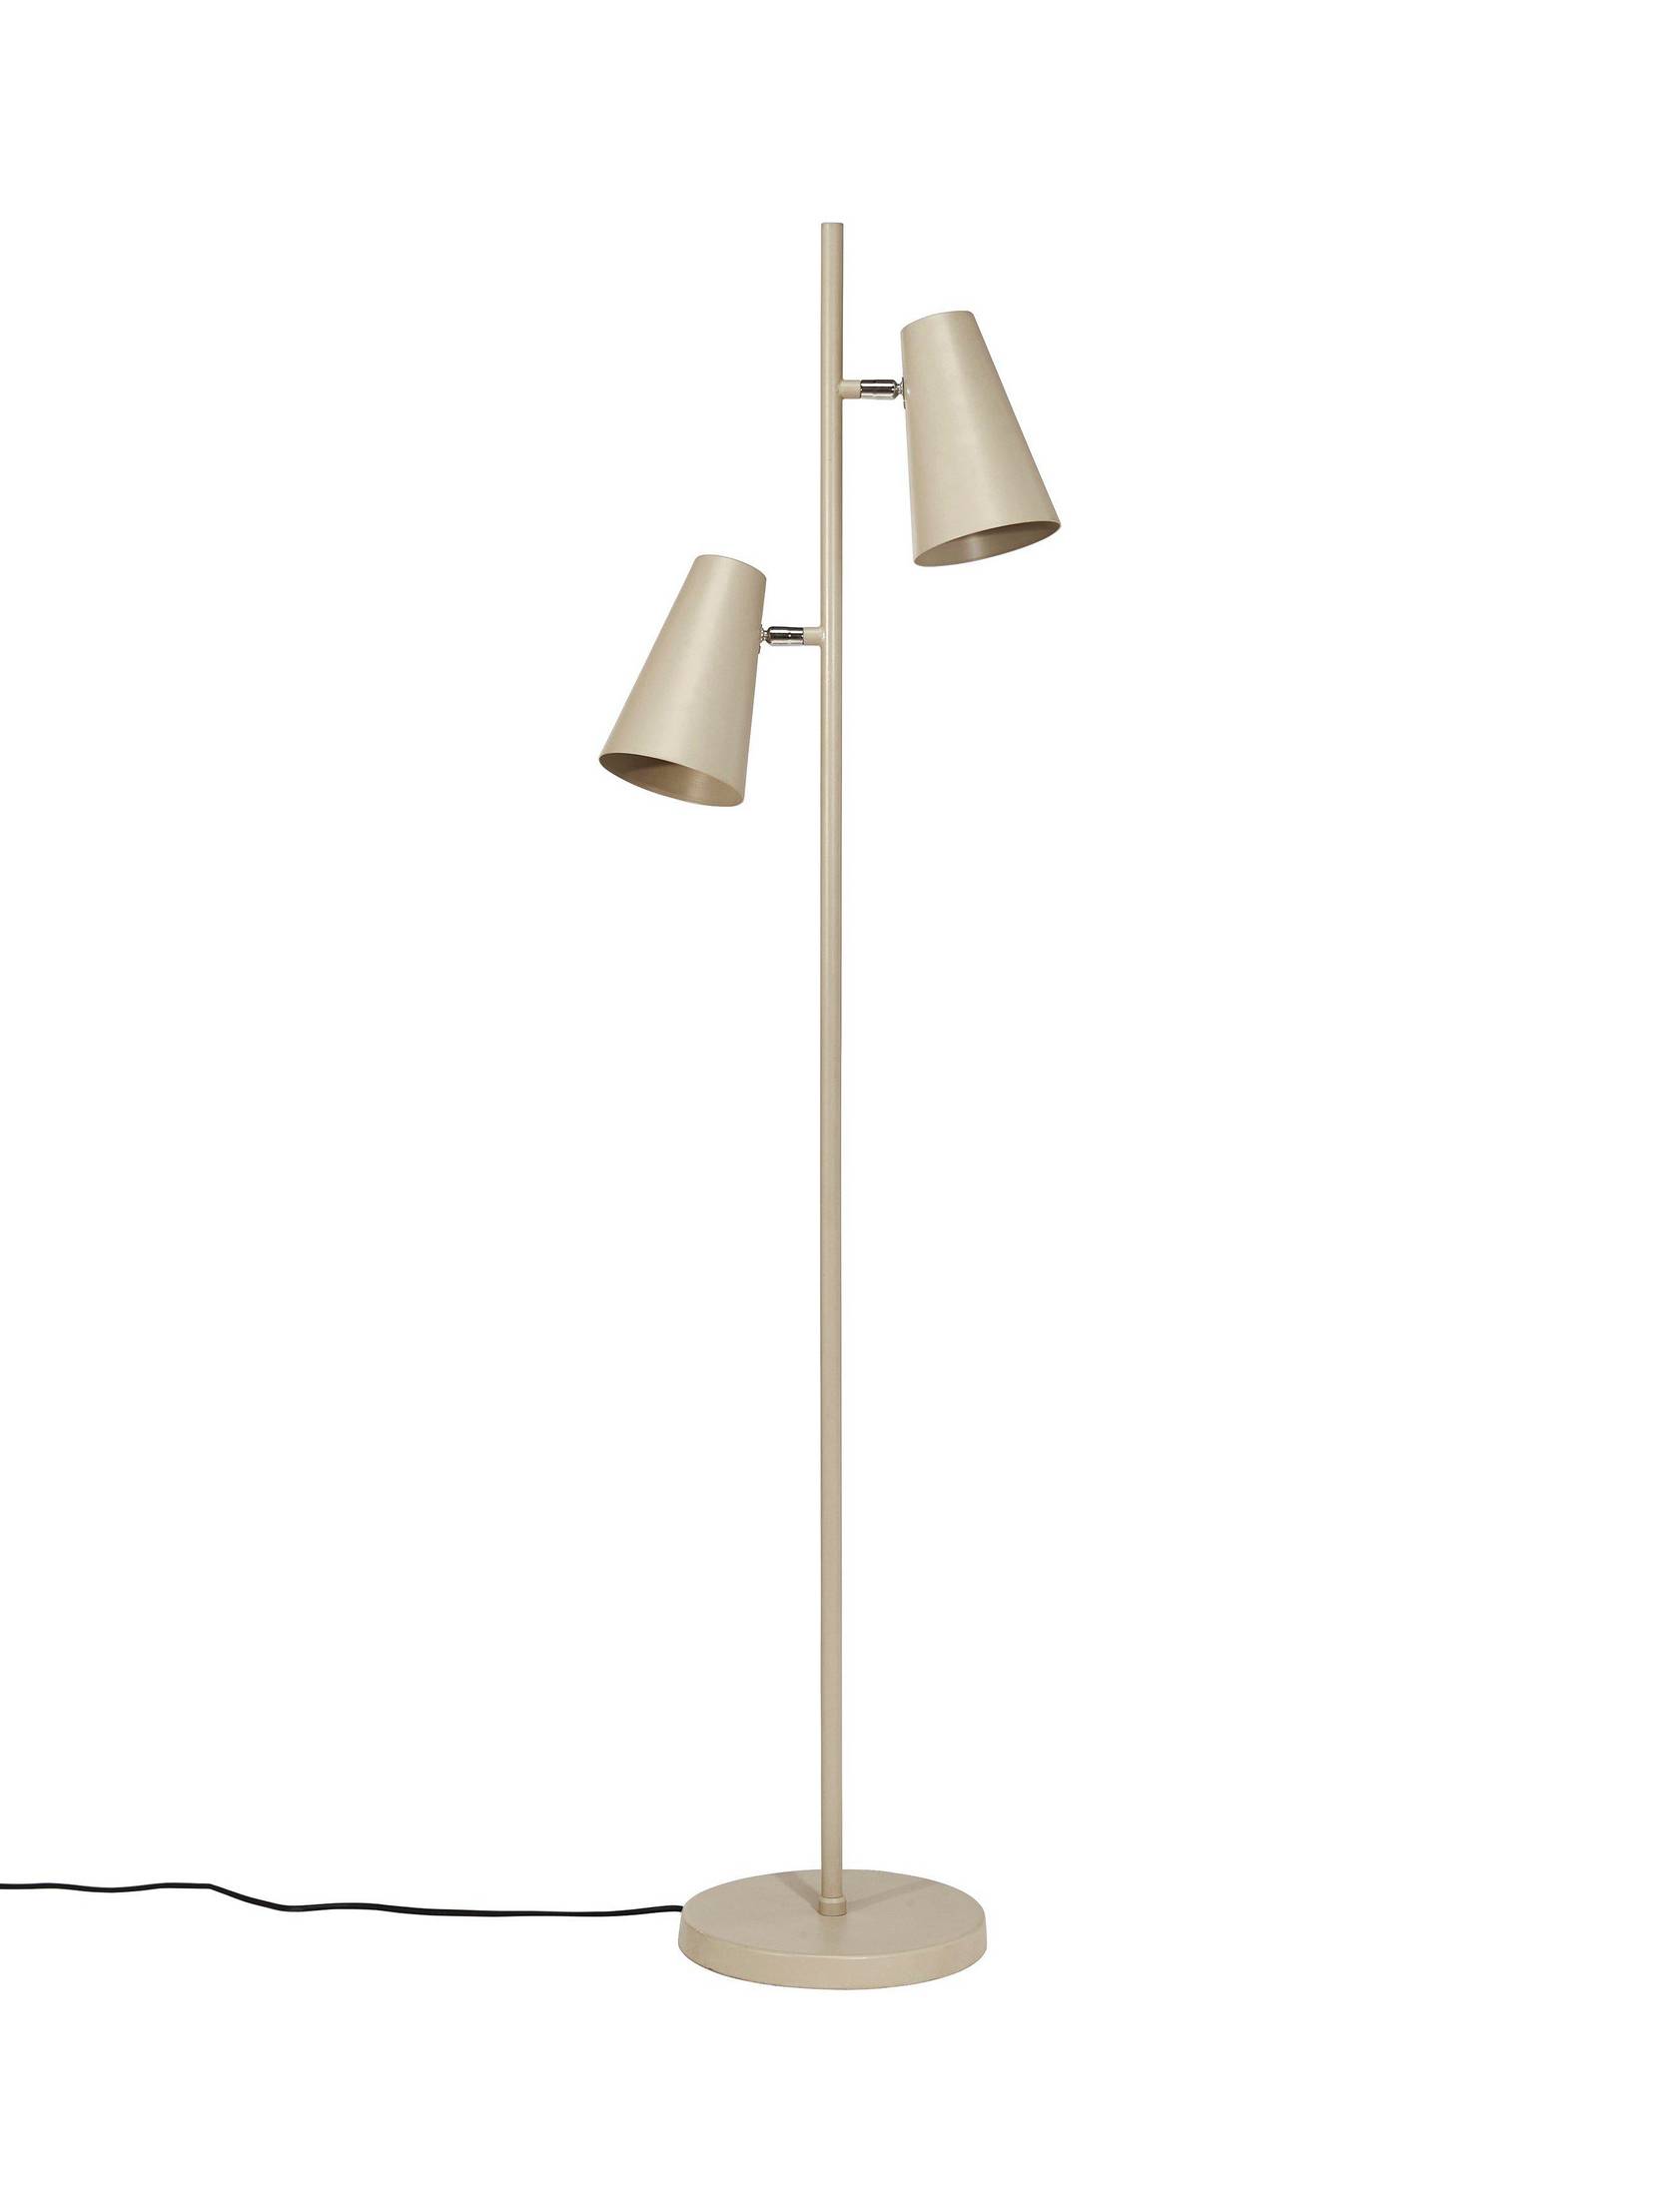 PR Home - Golvlampa Cornet 2arm 153 cm - Beige